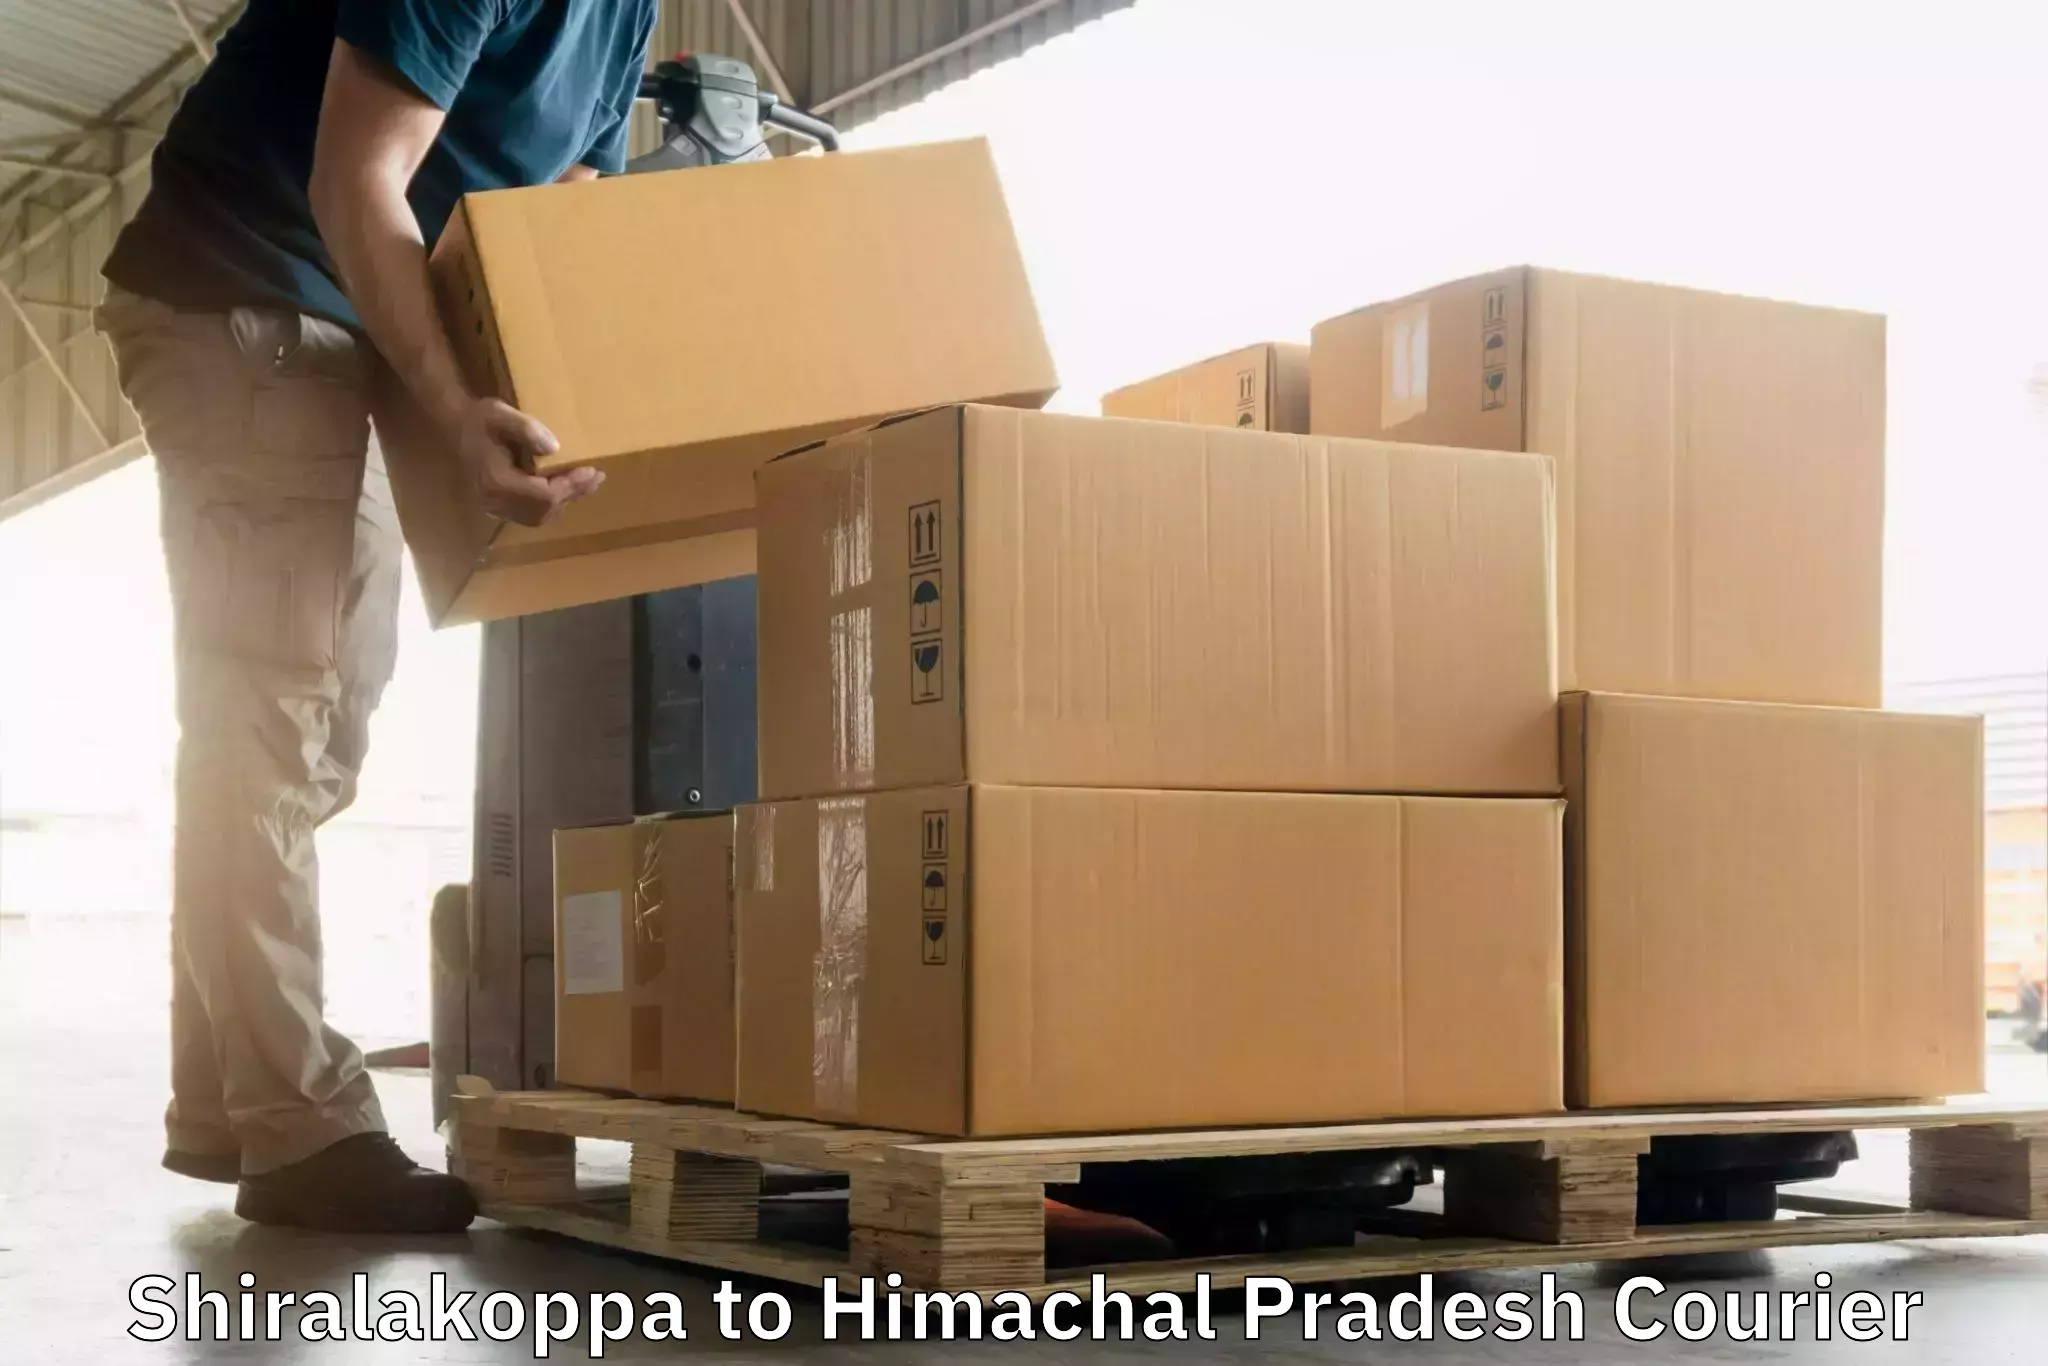 Efficient order fulfillment Shiralakoppa to Himachal Pradesh